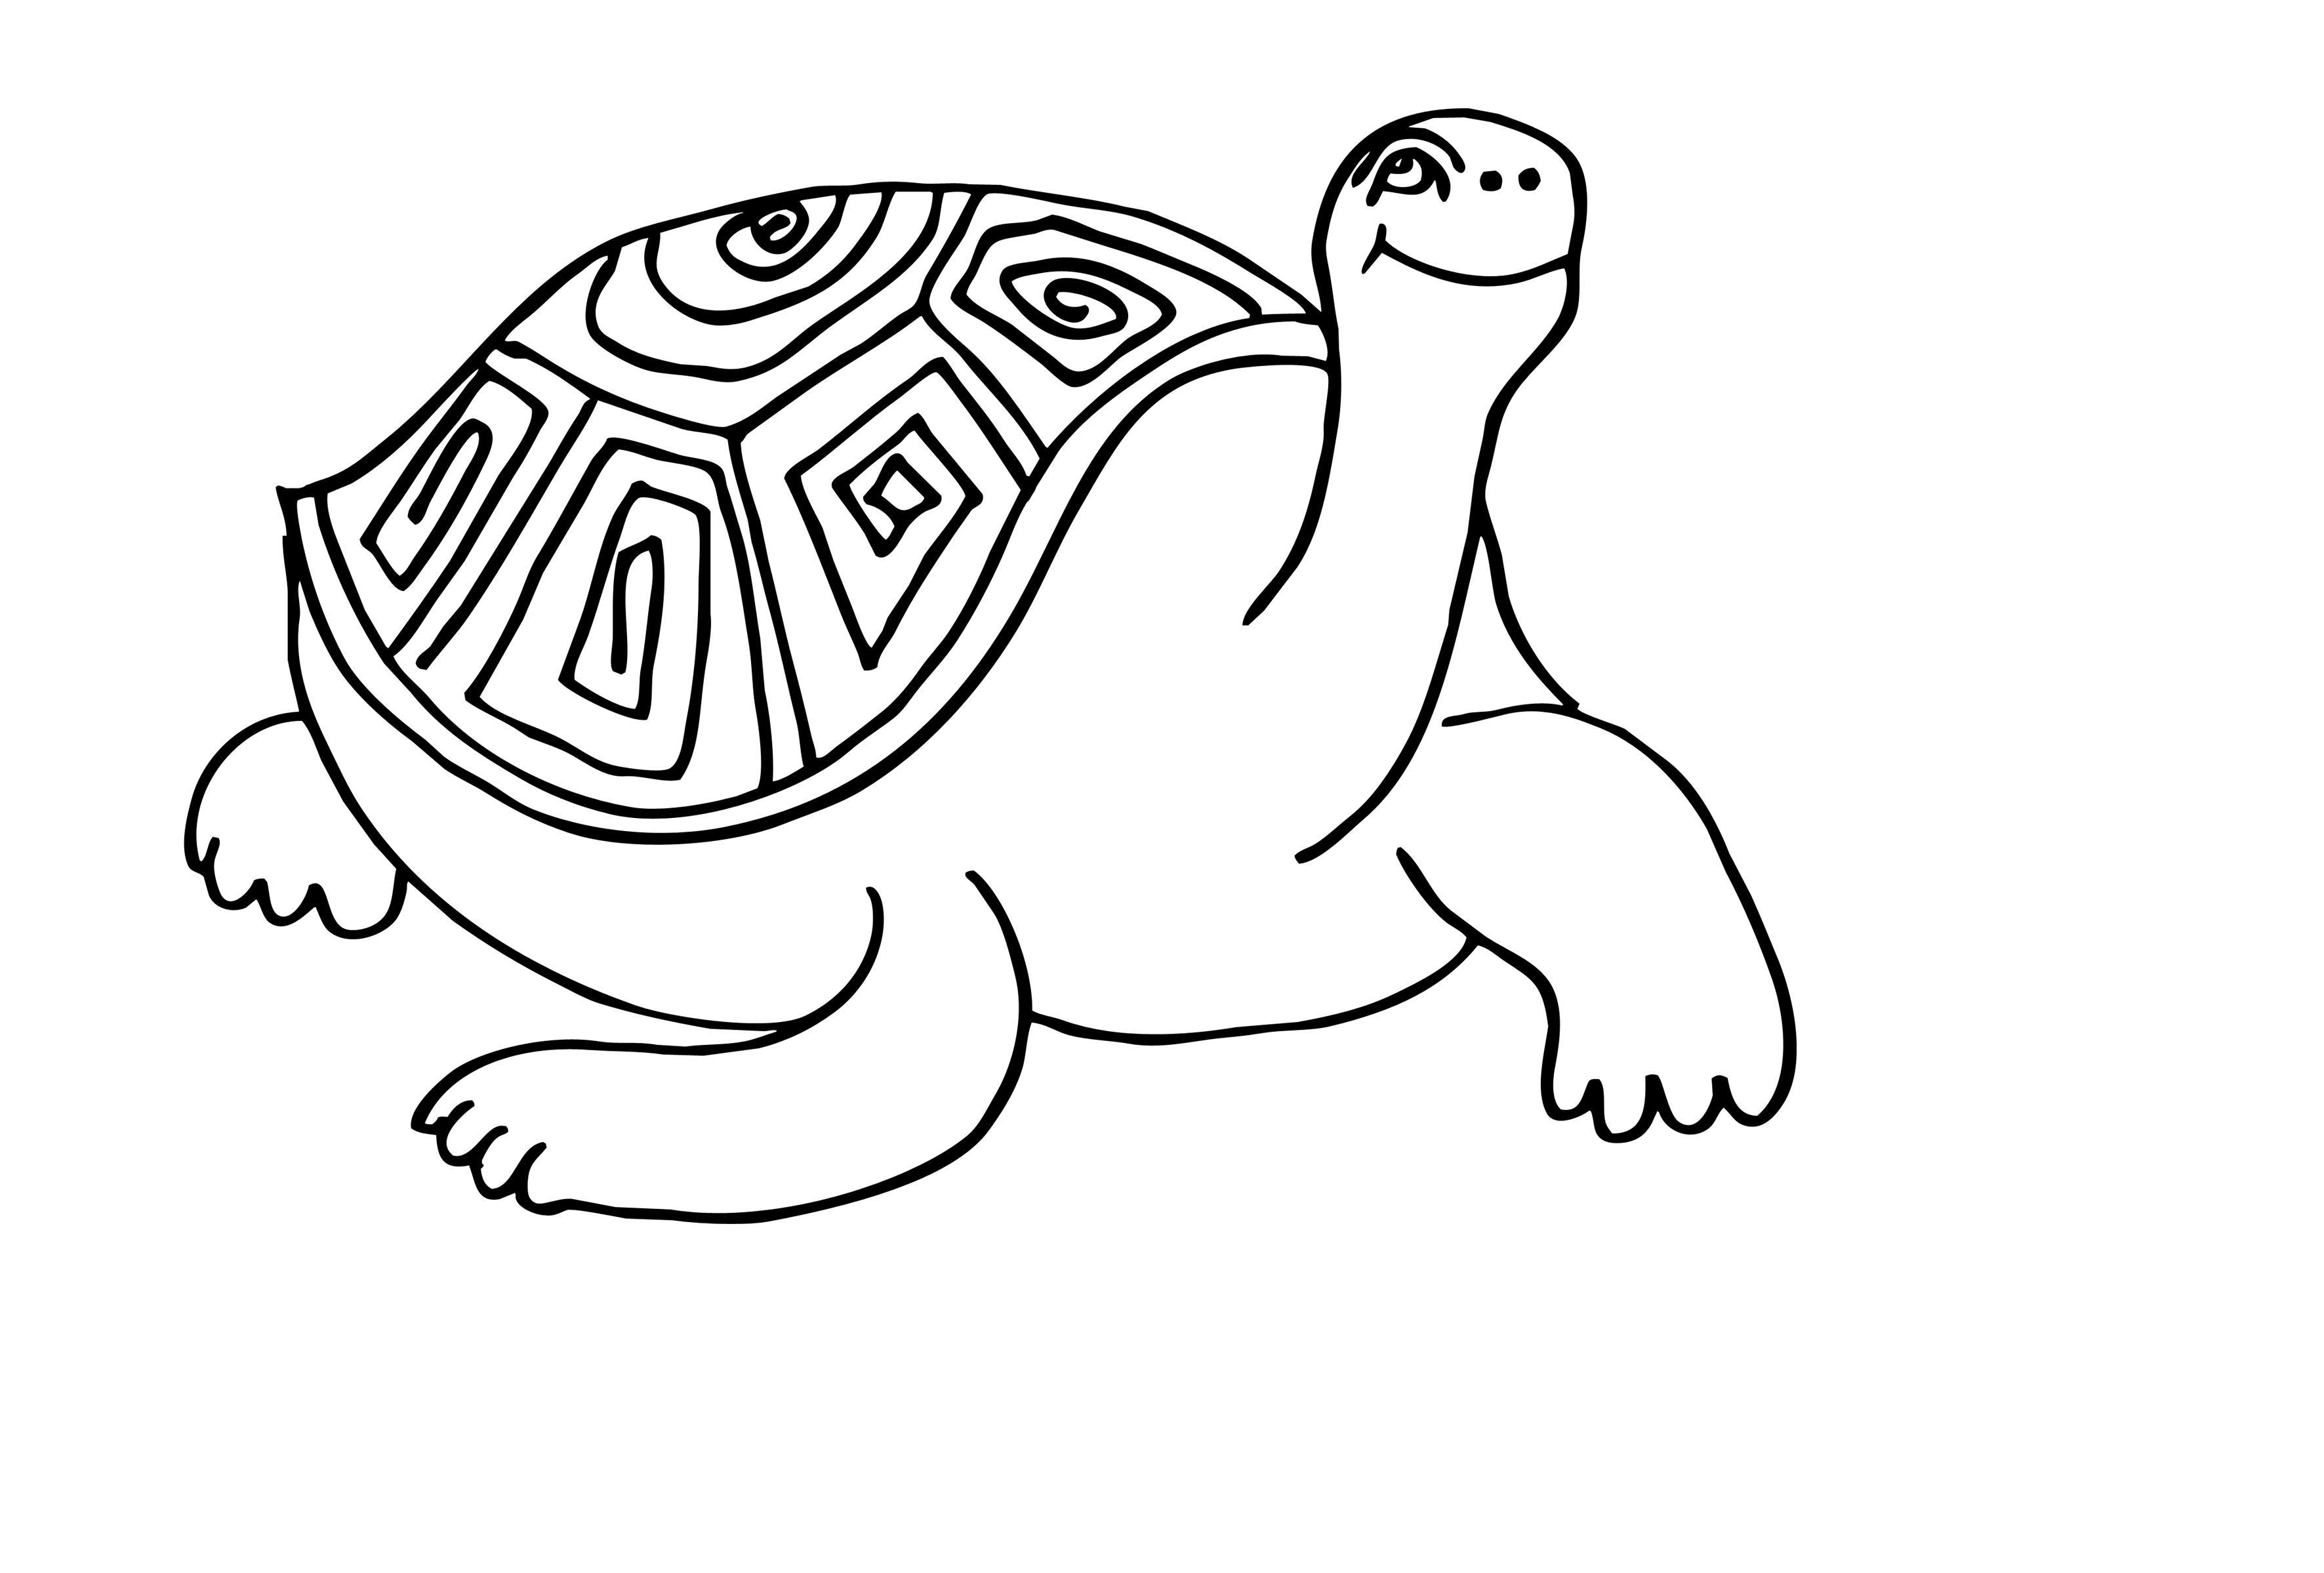 Раскраски Черепаха черепашка  Черепаха